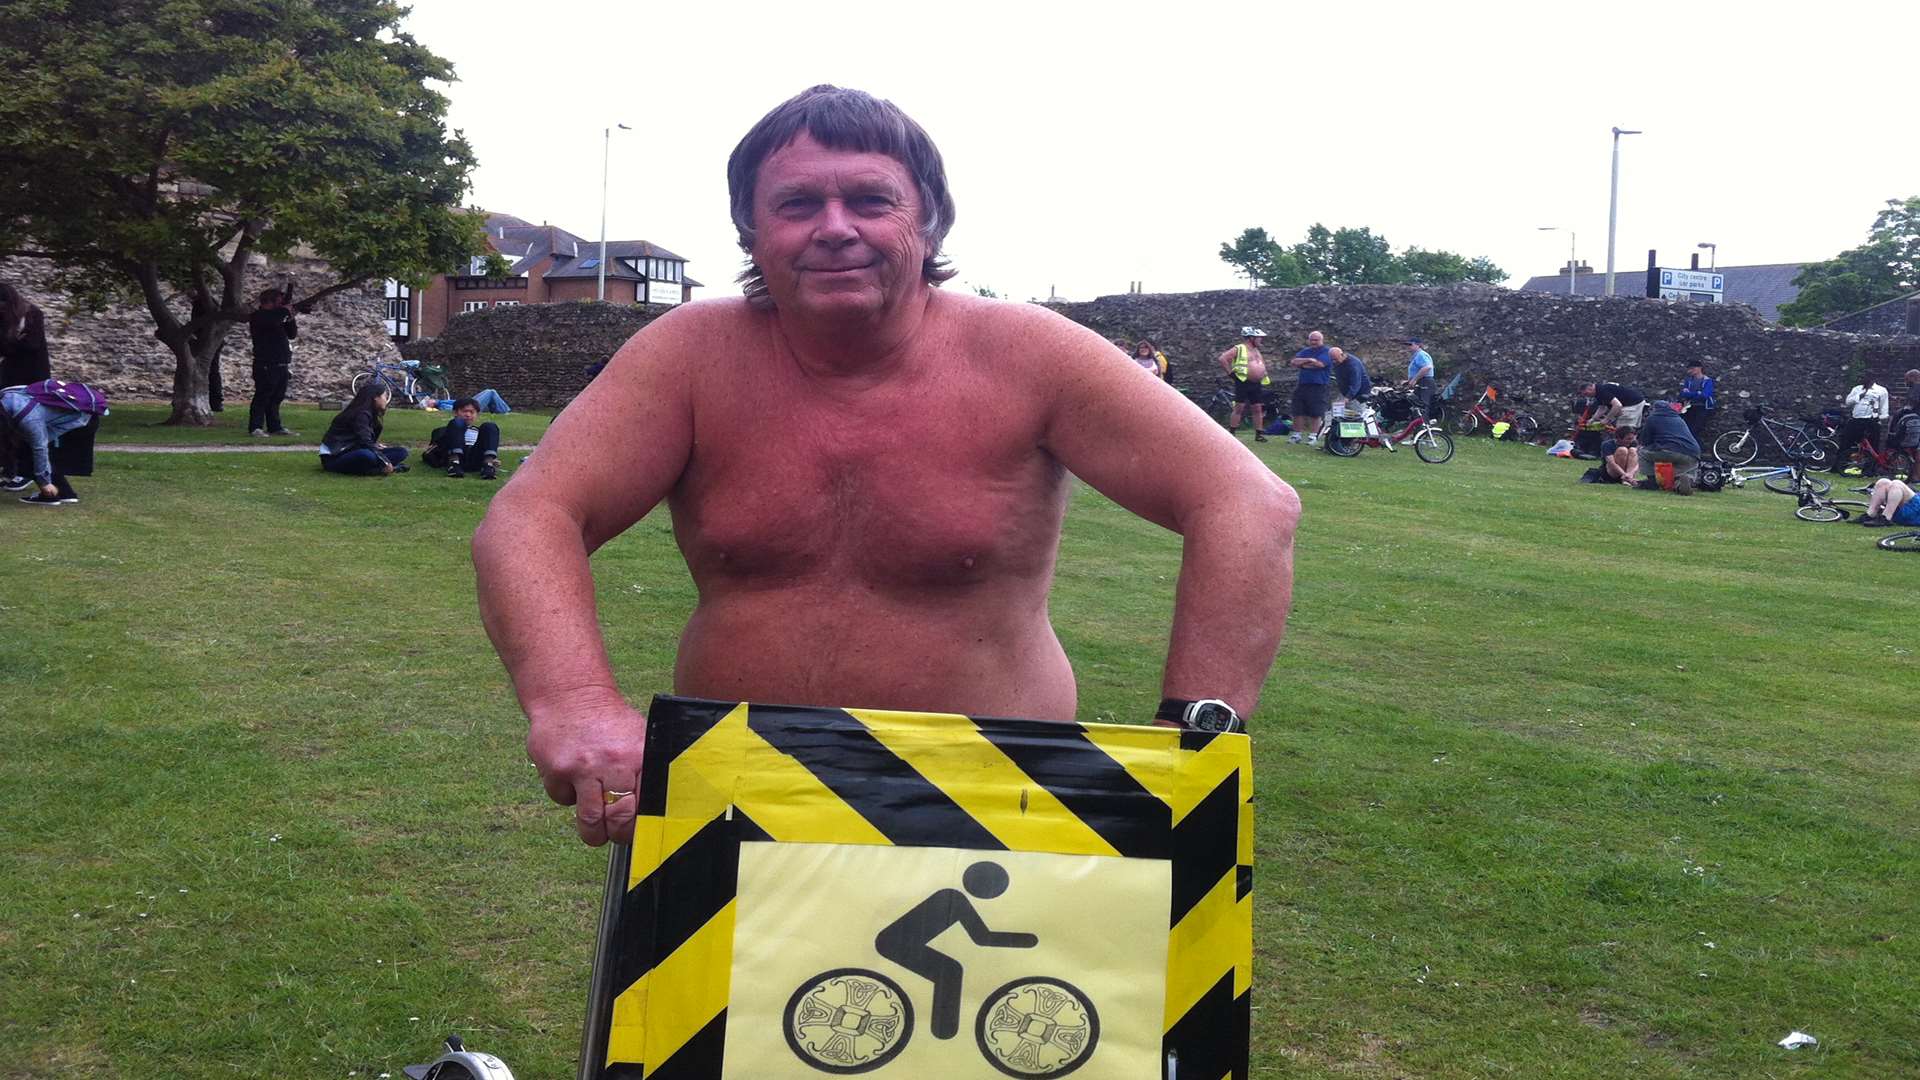 Naked bike ride organiser Barry Freeman